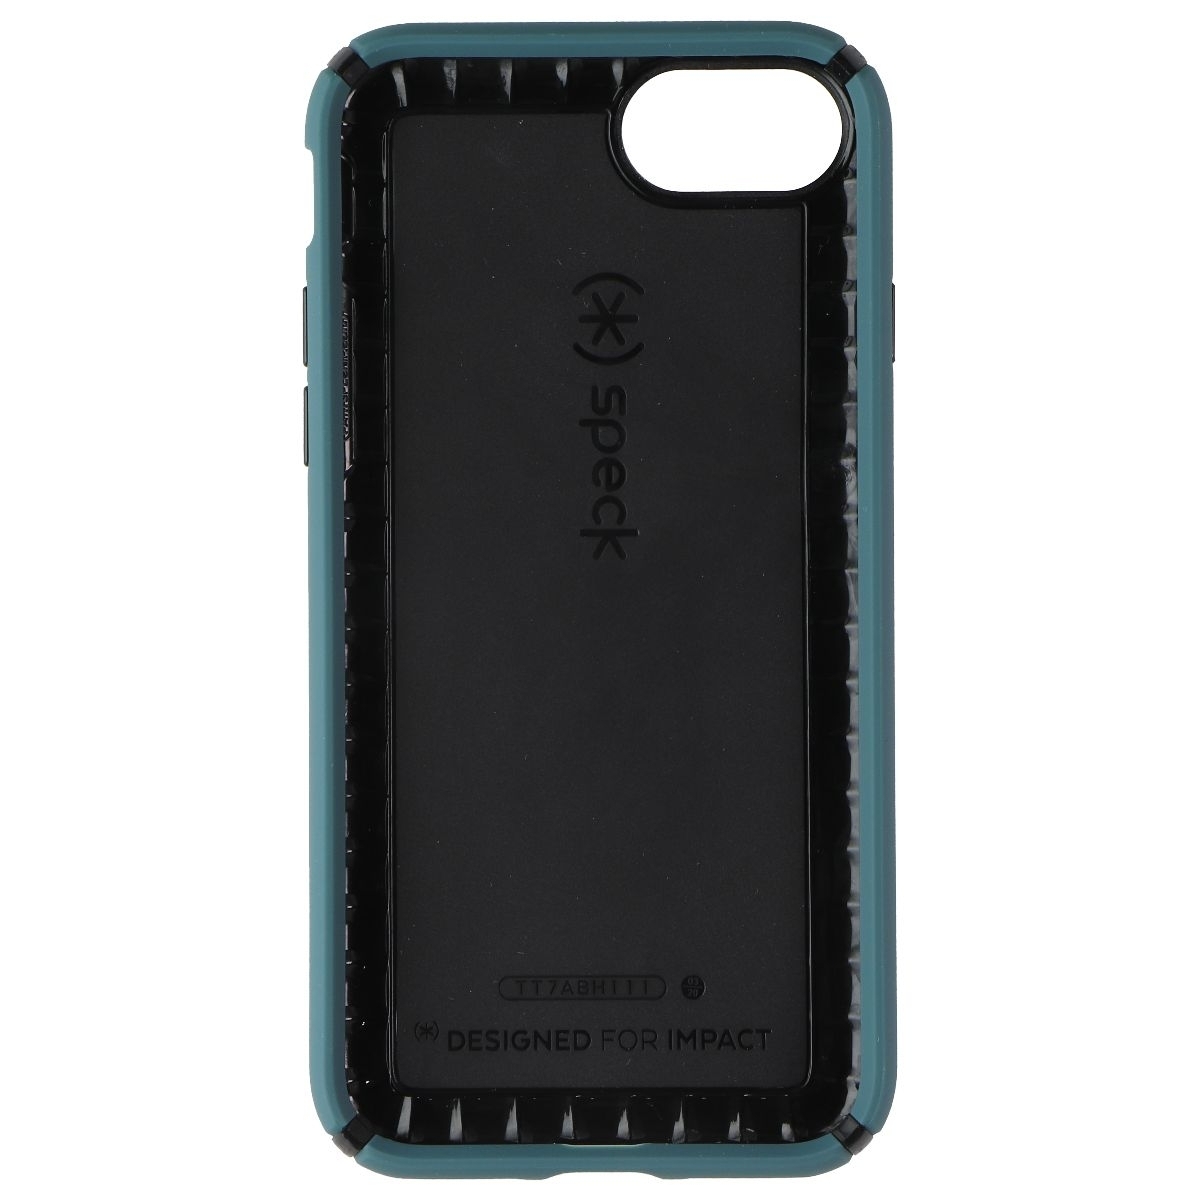 Speck Presidio2 Pro Series Case For IPhone SE (2nd Gen) / 8 / 7 - Terrain Green (Refurbished)